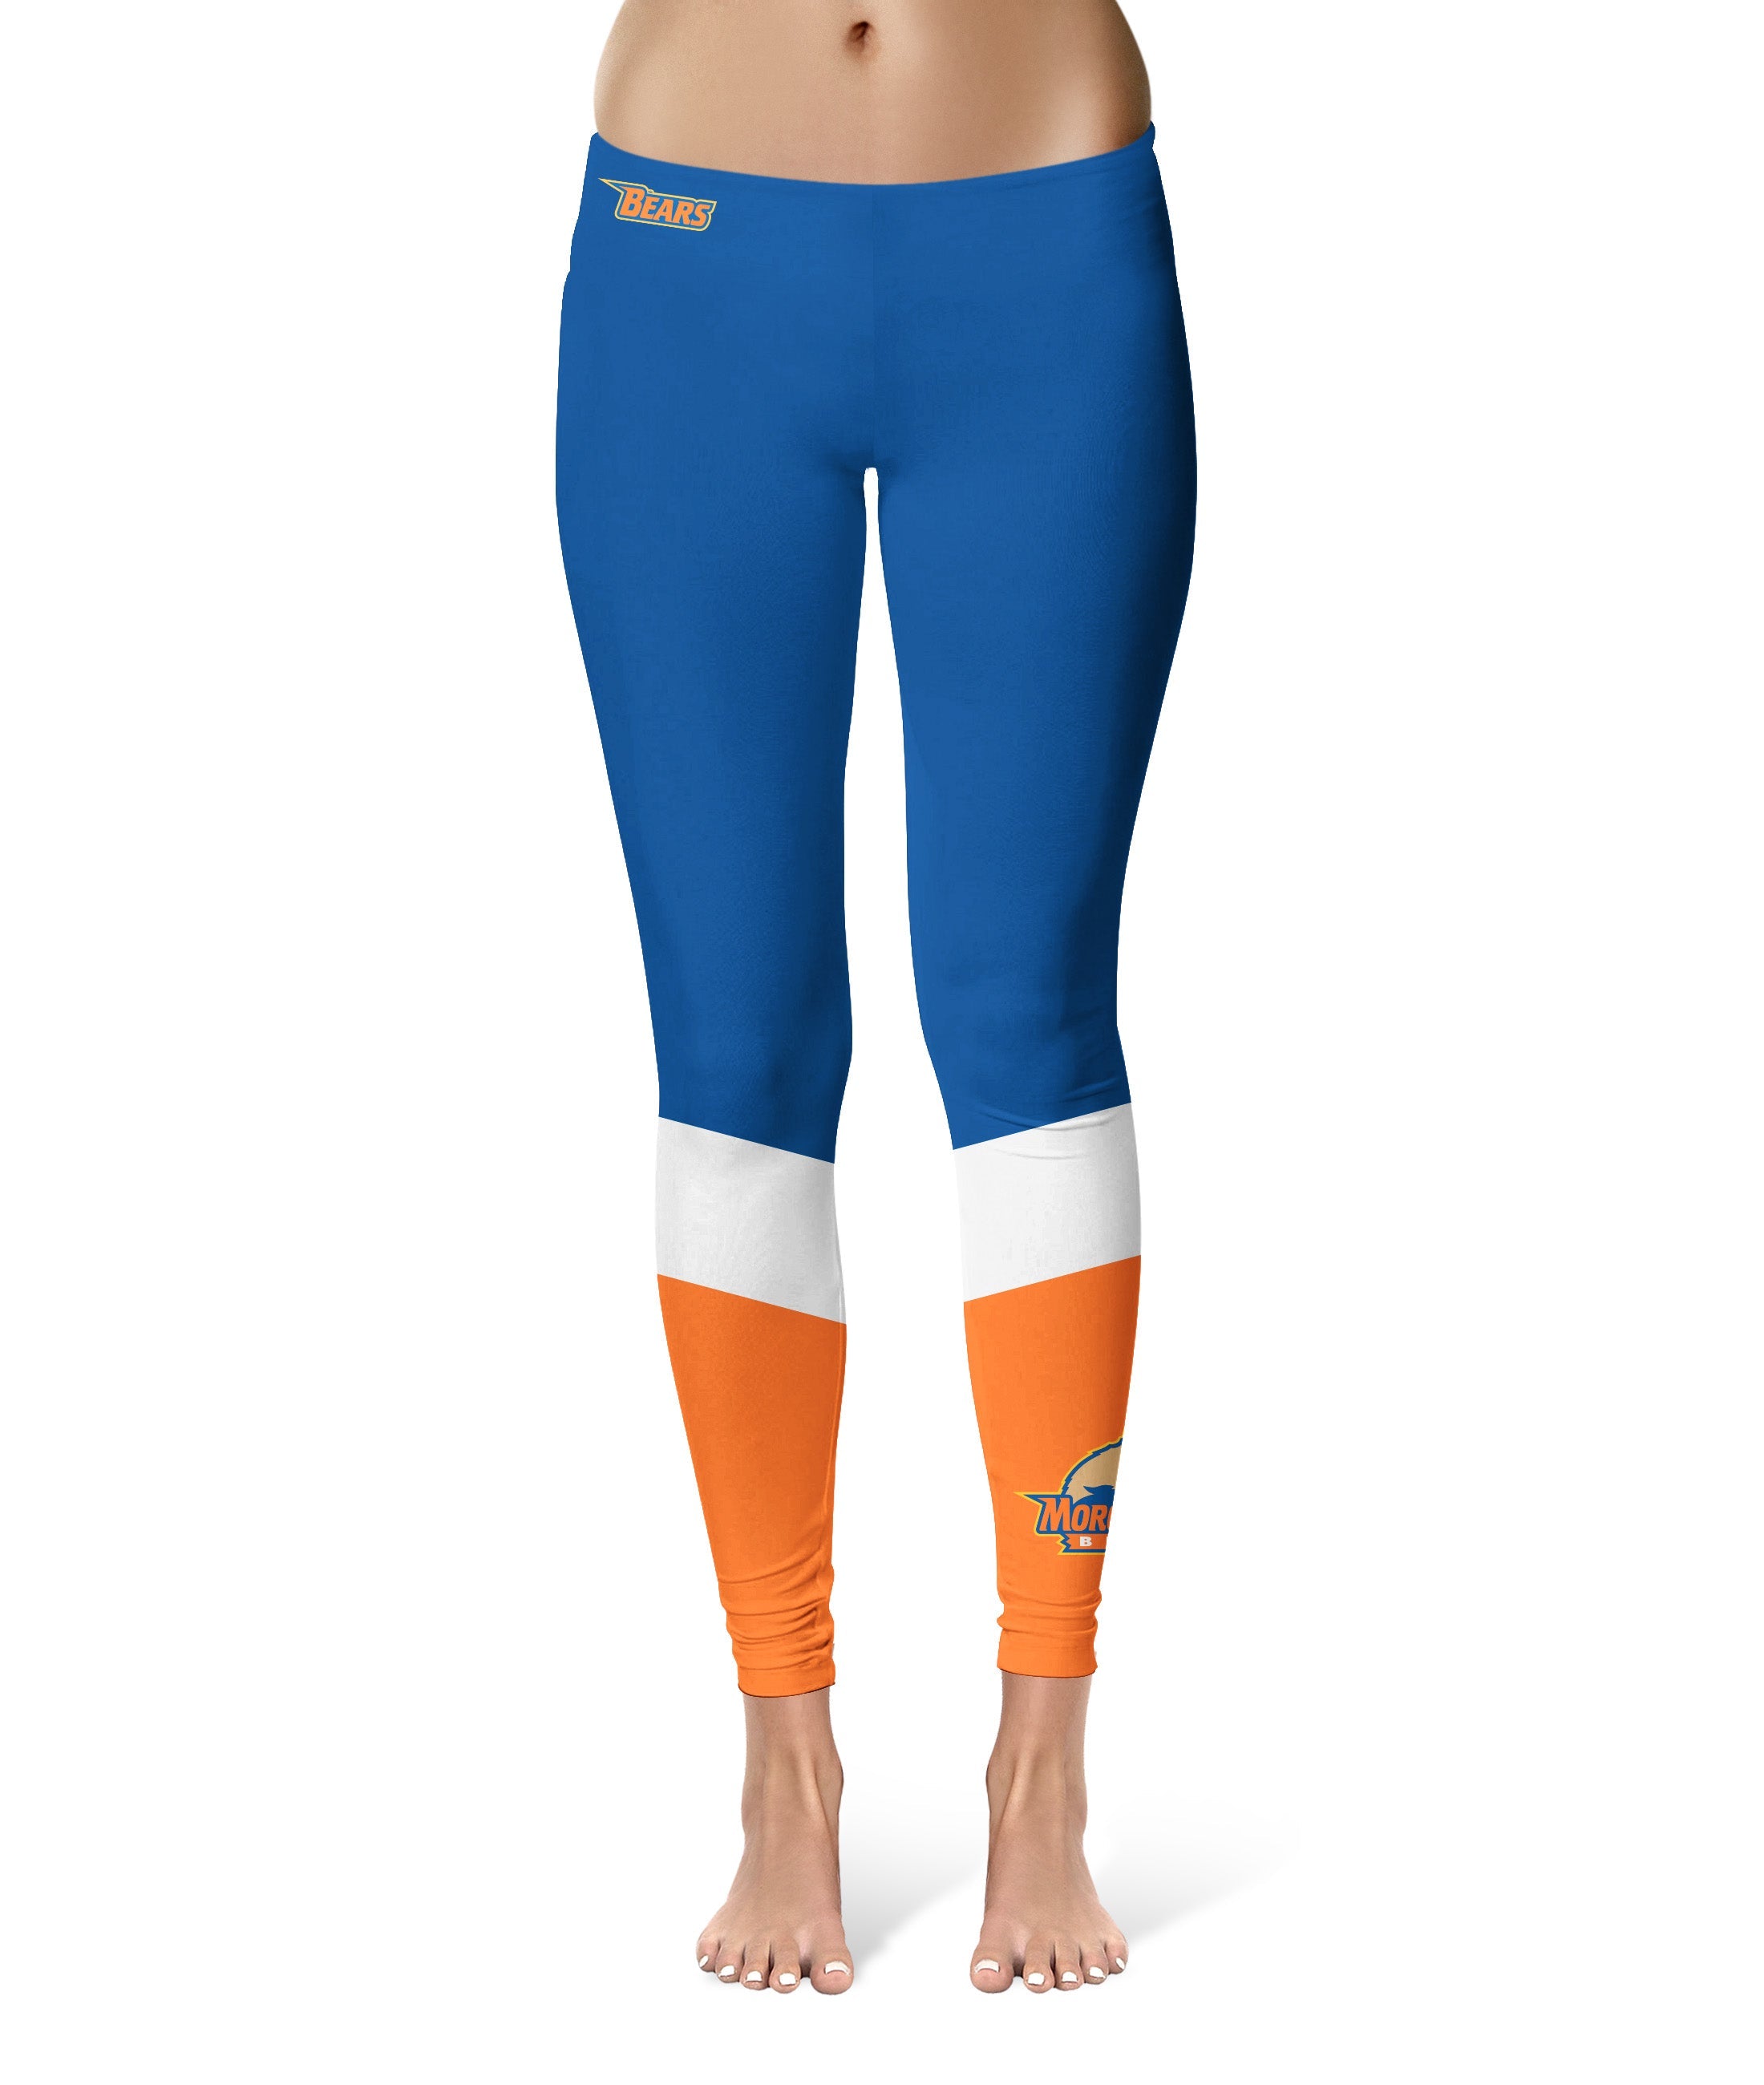 Buy Ankle Length Women Leggings Orange at Amazon.in